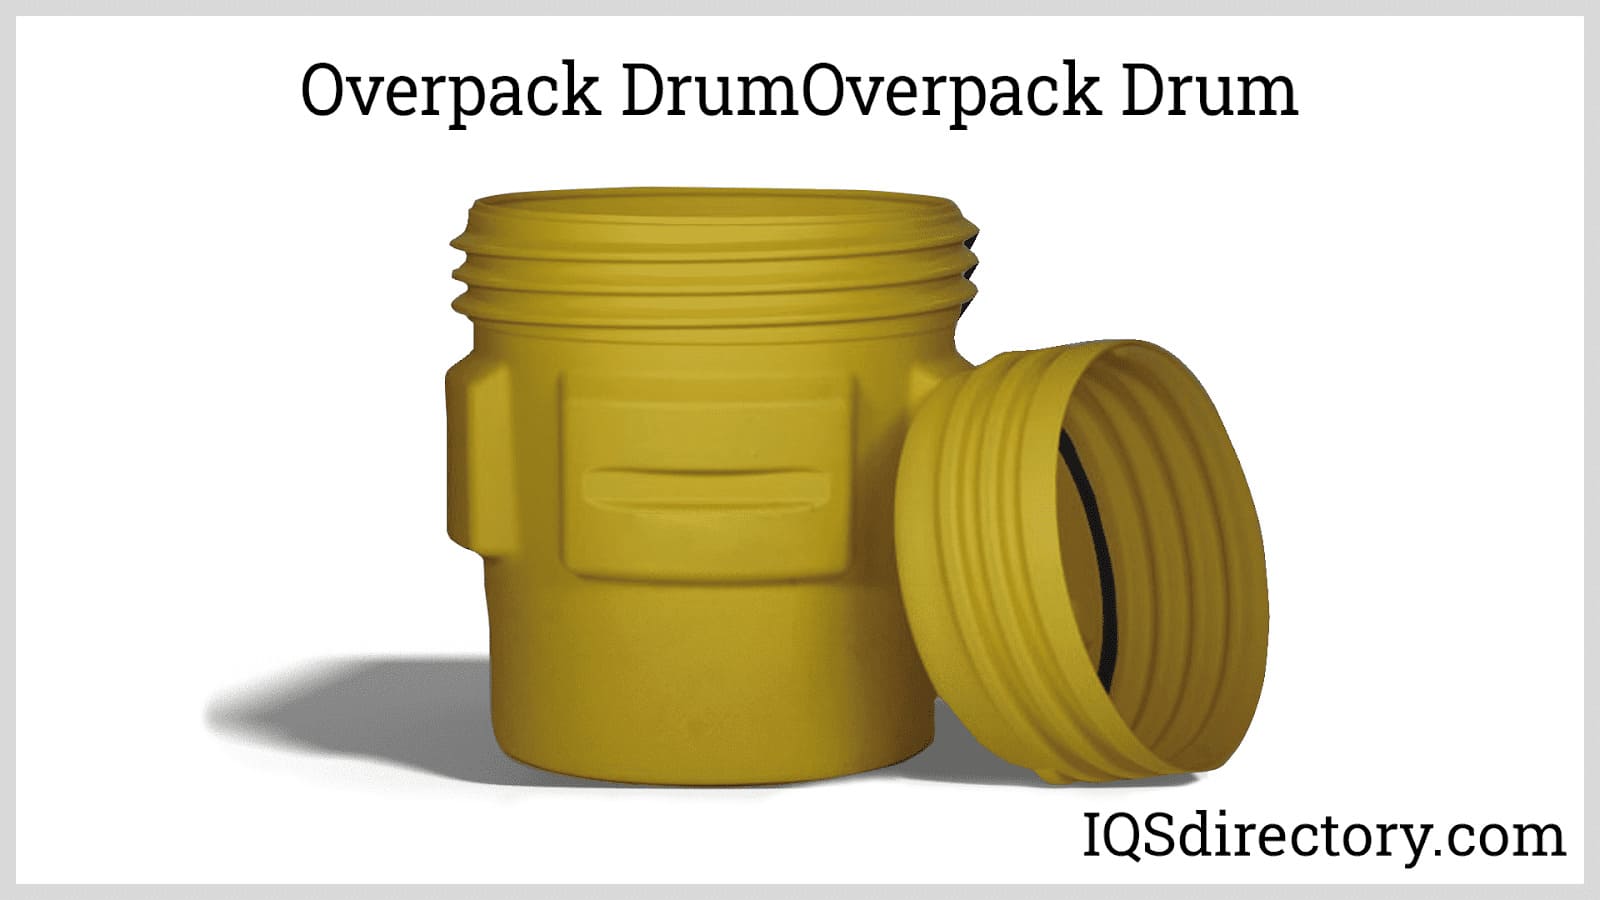 Overpack Drum